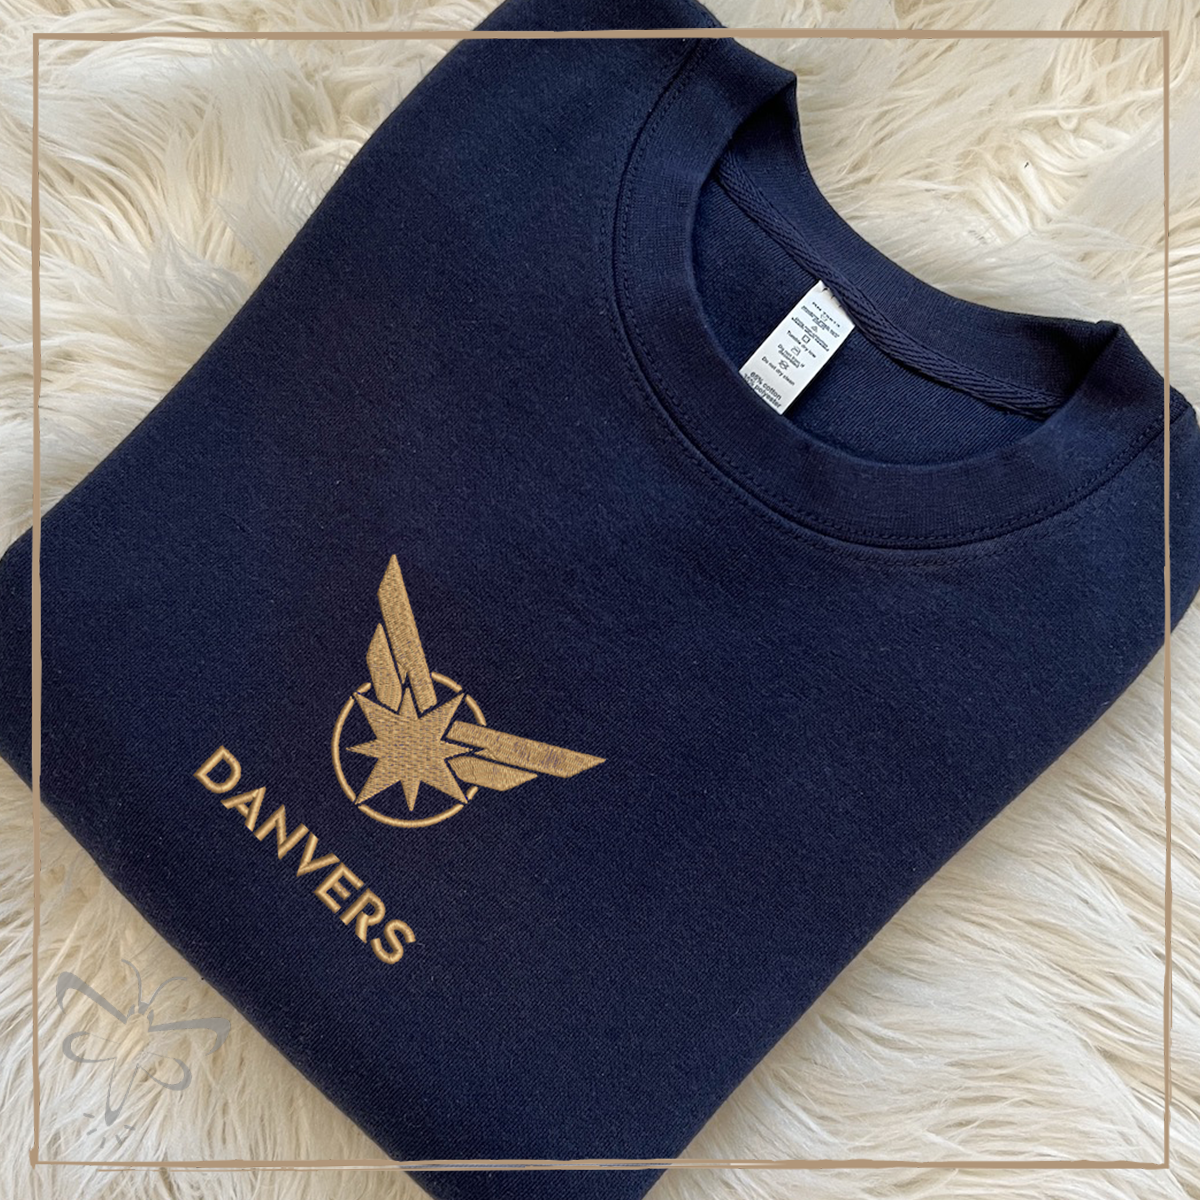 Danvers Embroidered Crewneck Xs / Navy Sweater